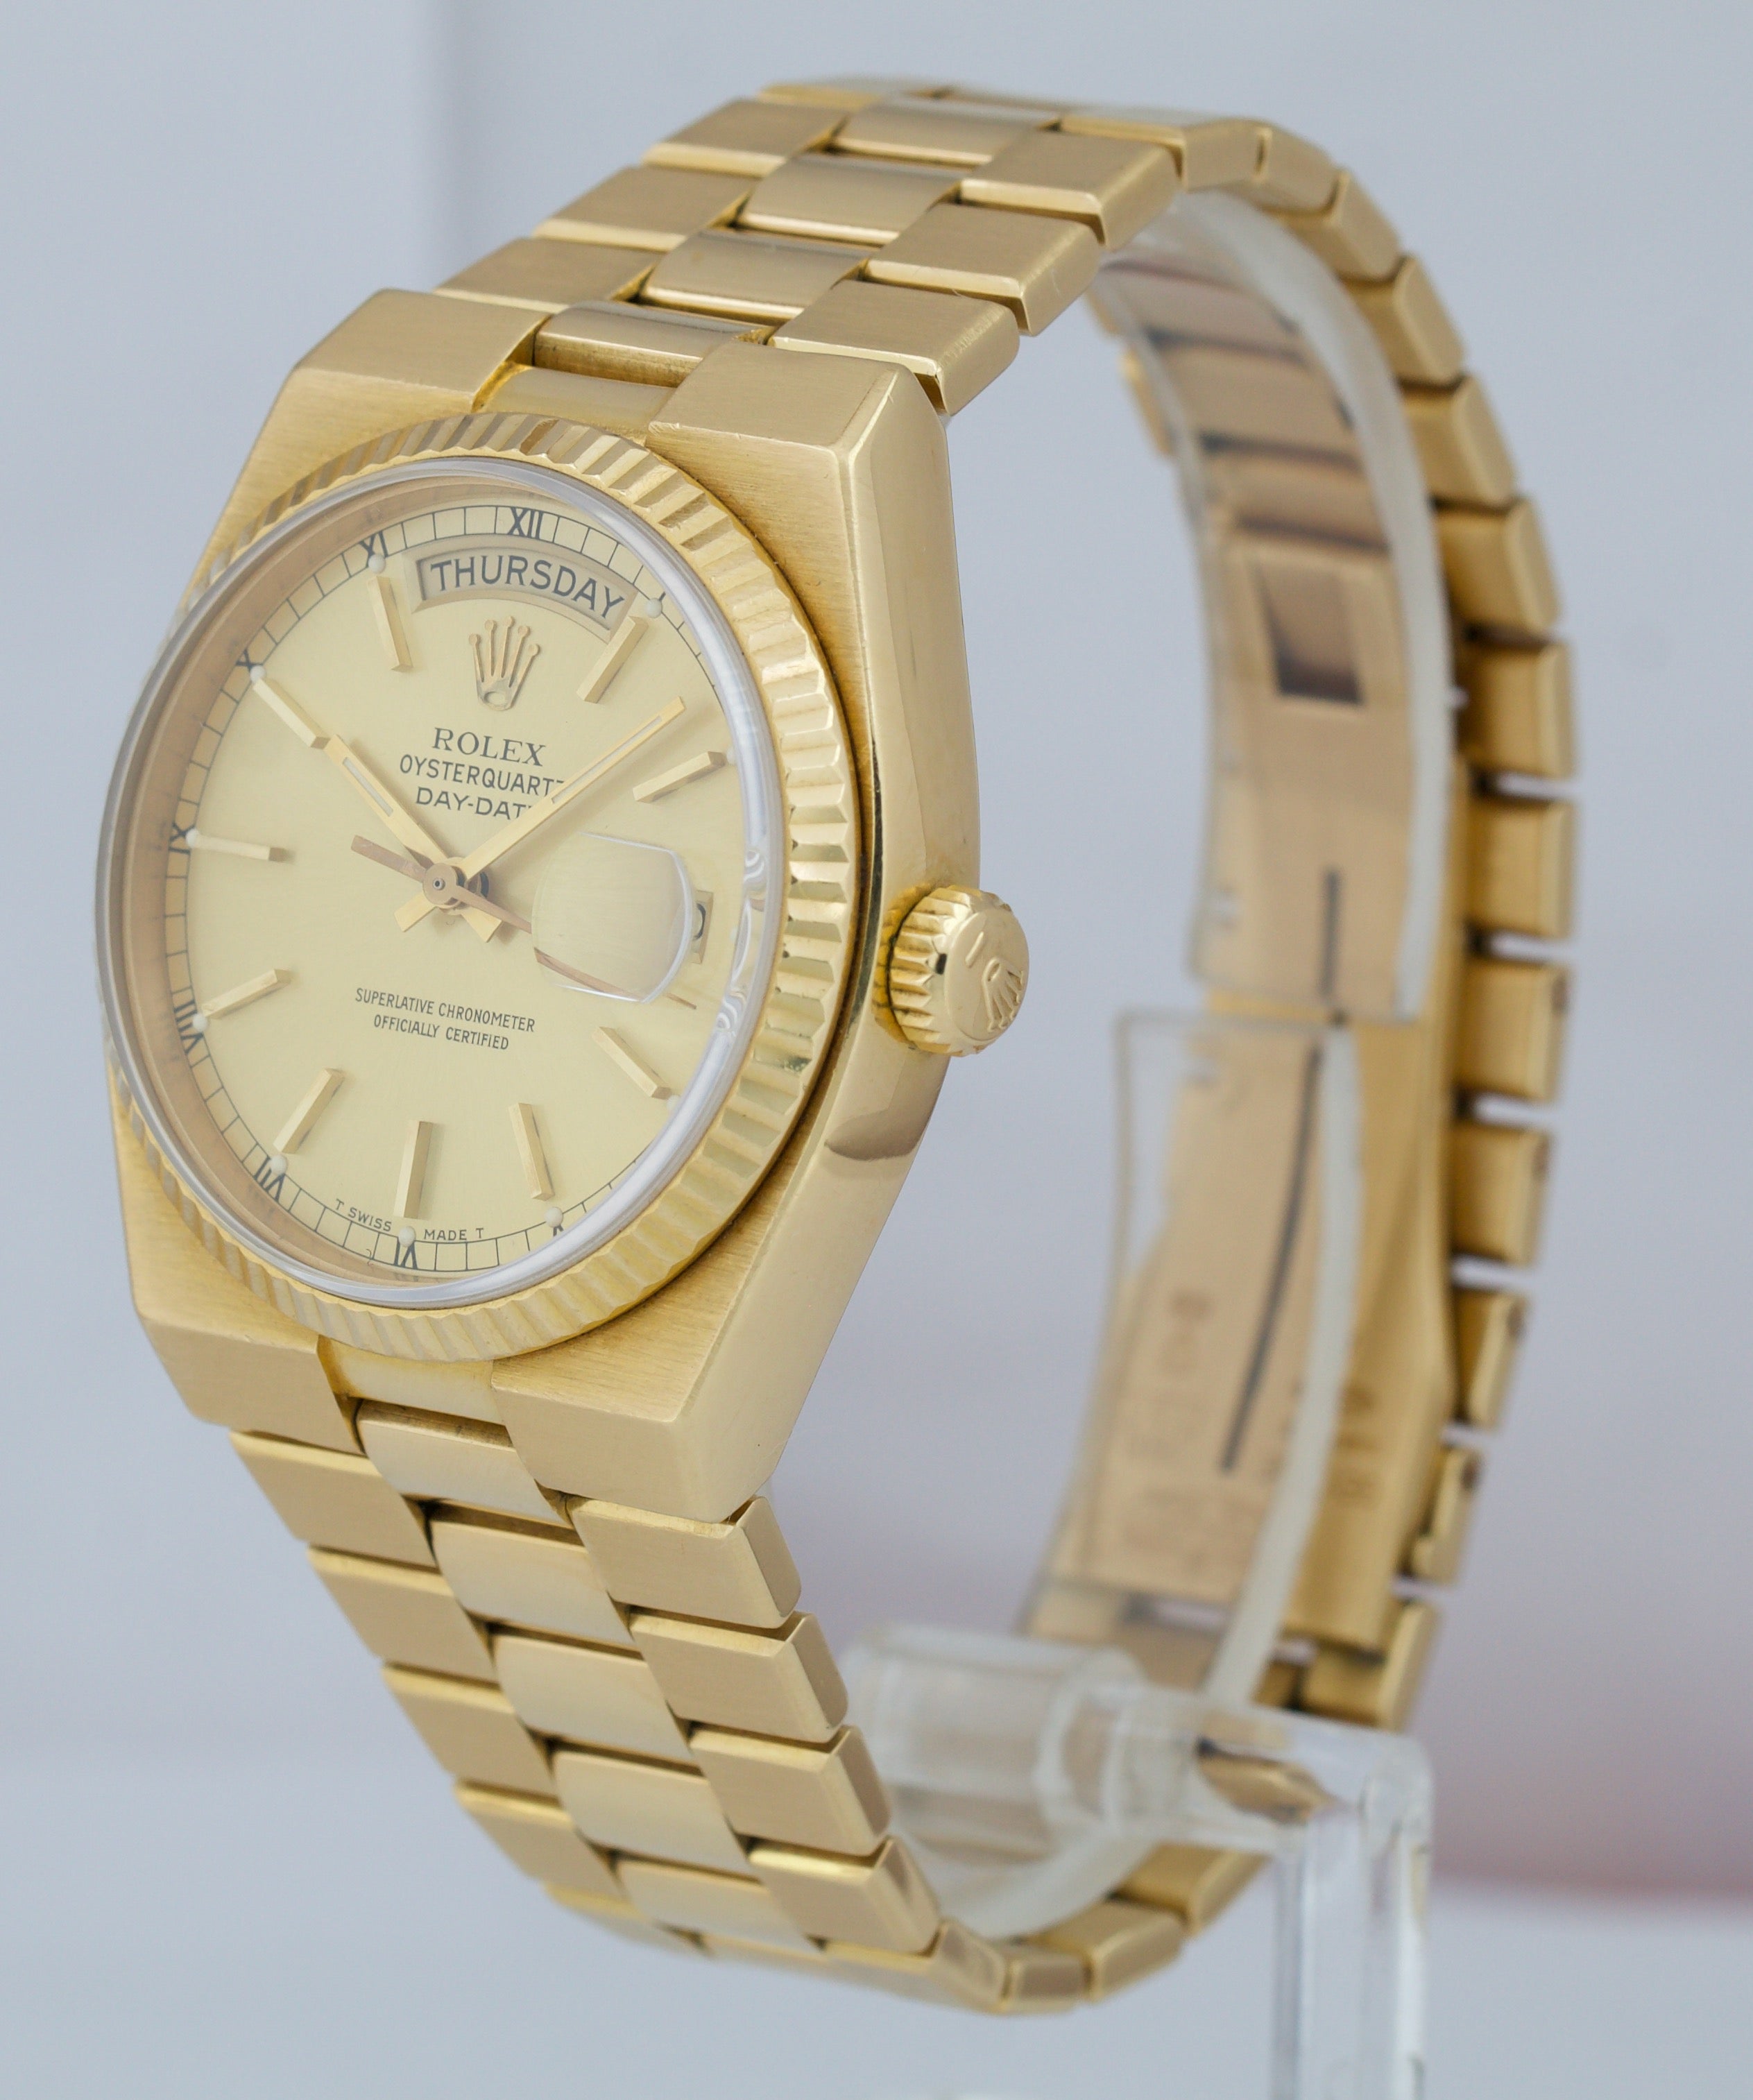 Rolex OysterQuartz Day-Date President Gold 36mm Champagne Quartz Watch 19018